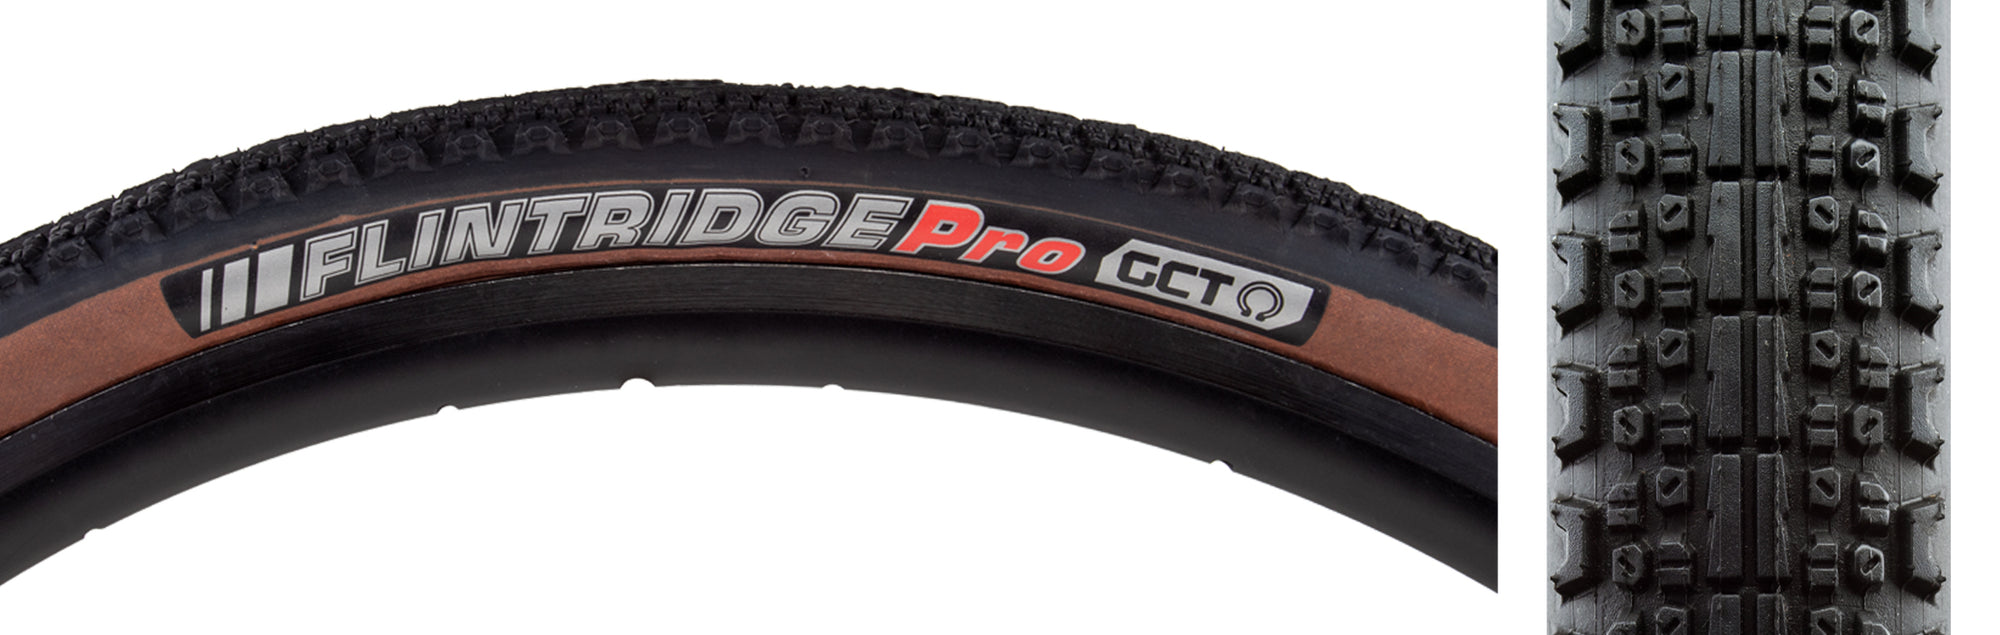 Kenda Flintridge Pro Folding Tire - 700 x 40